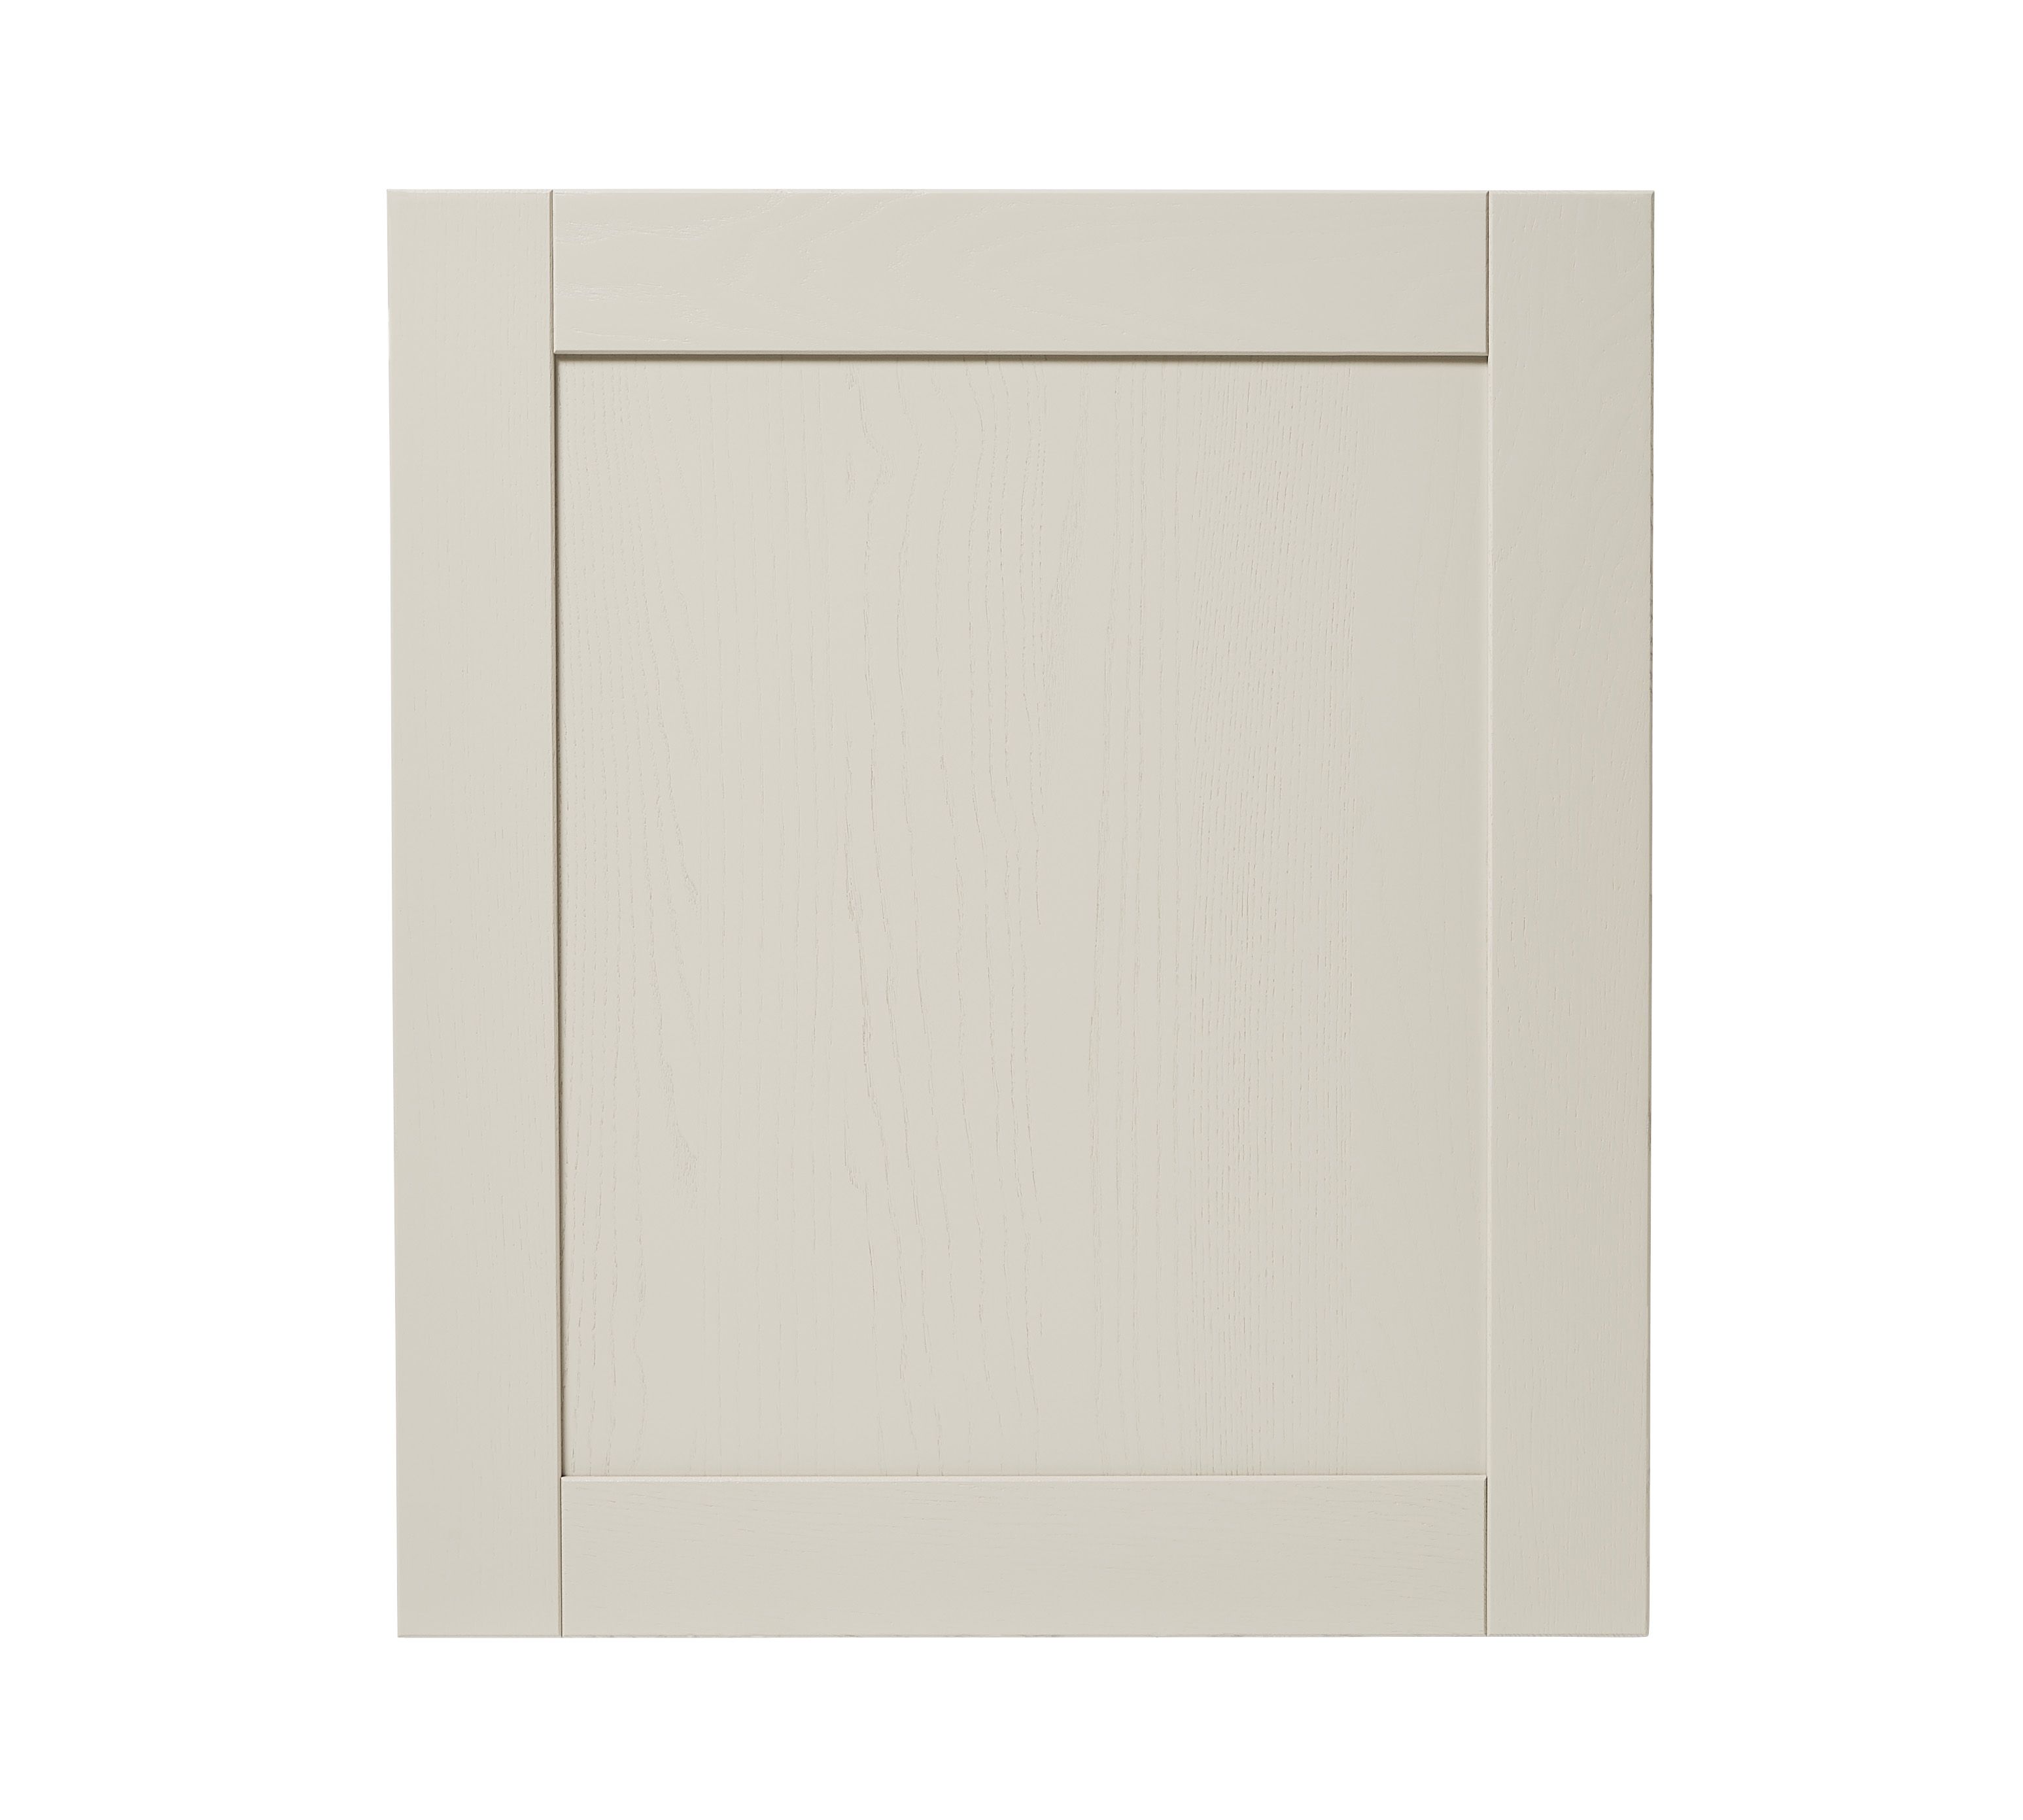 GoodHome Verbena Matt cashmere painted natural ash shaker Appliance Cabinet door (W)600mm (H)687mm (T)20mm